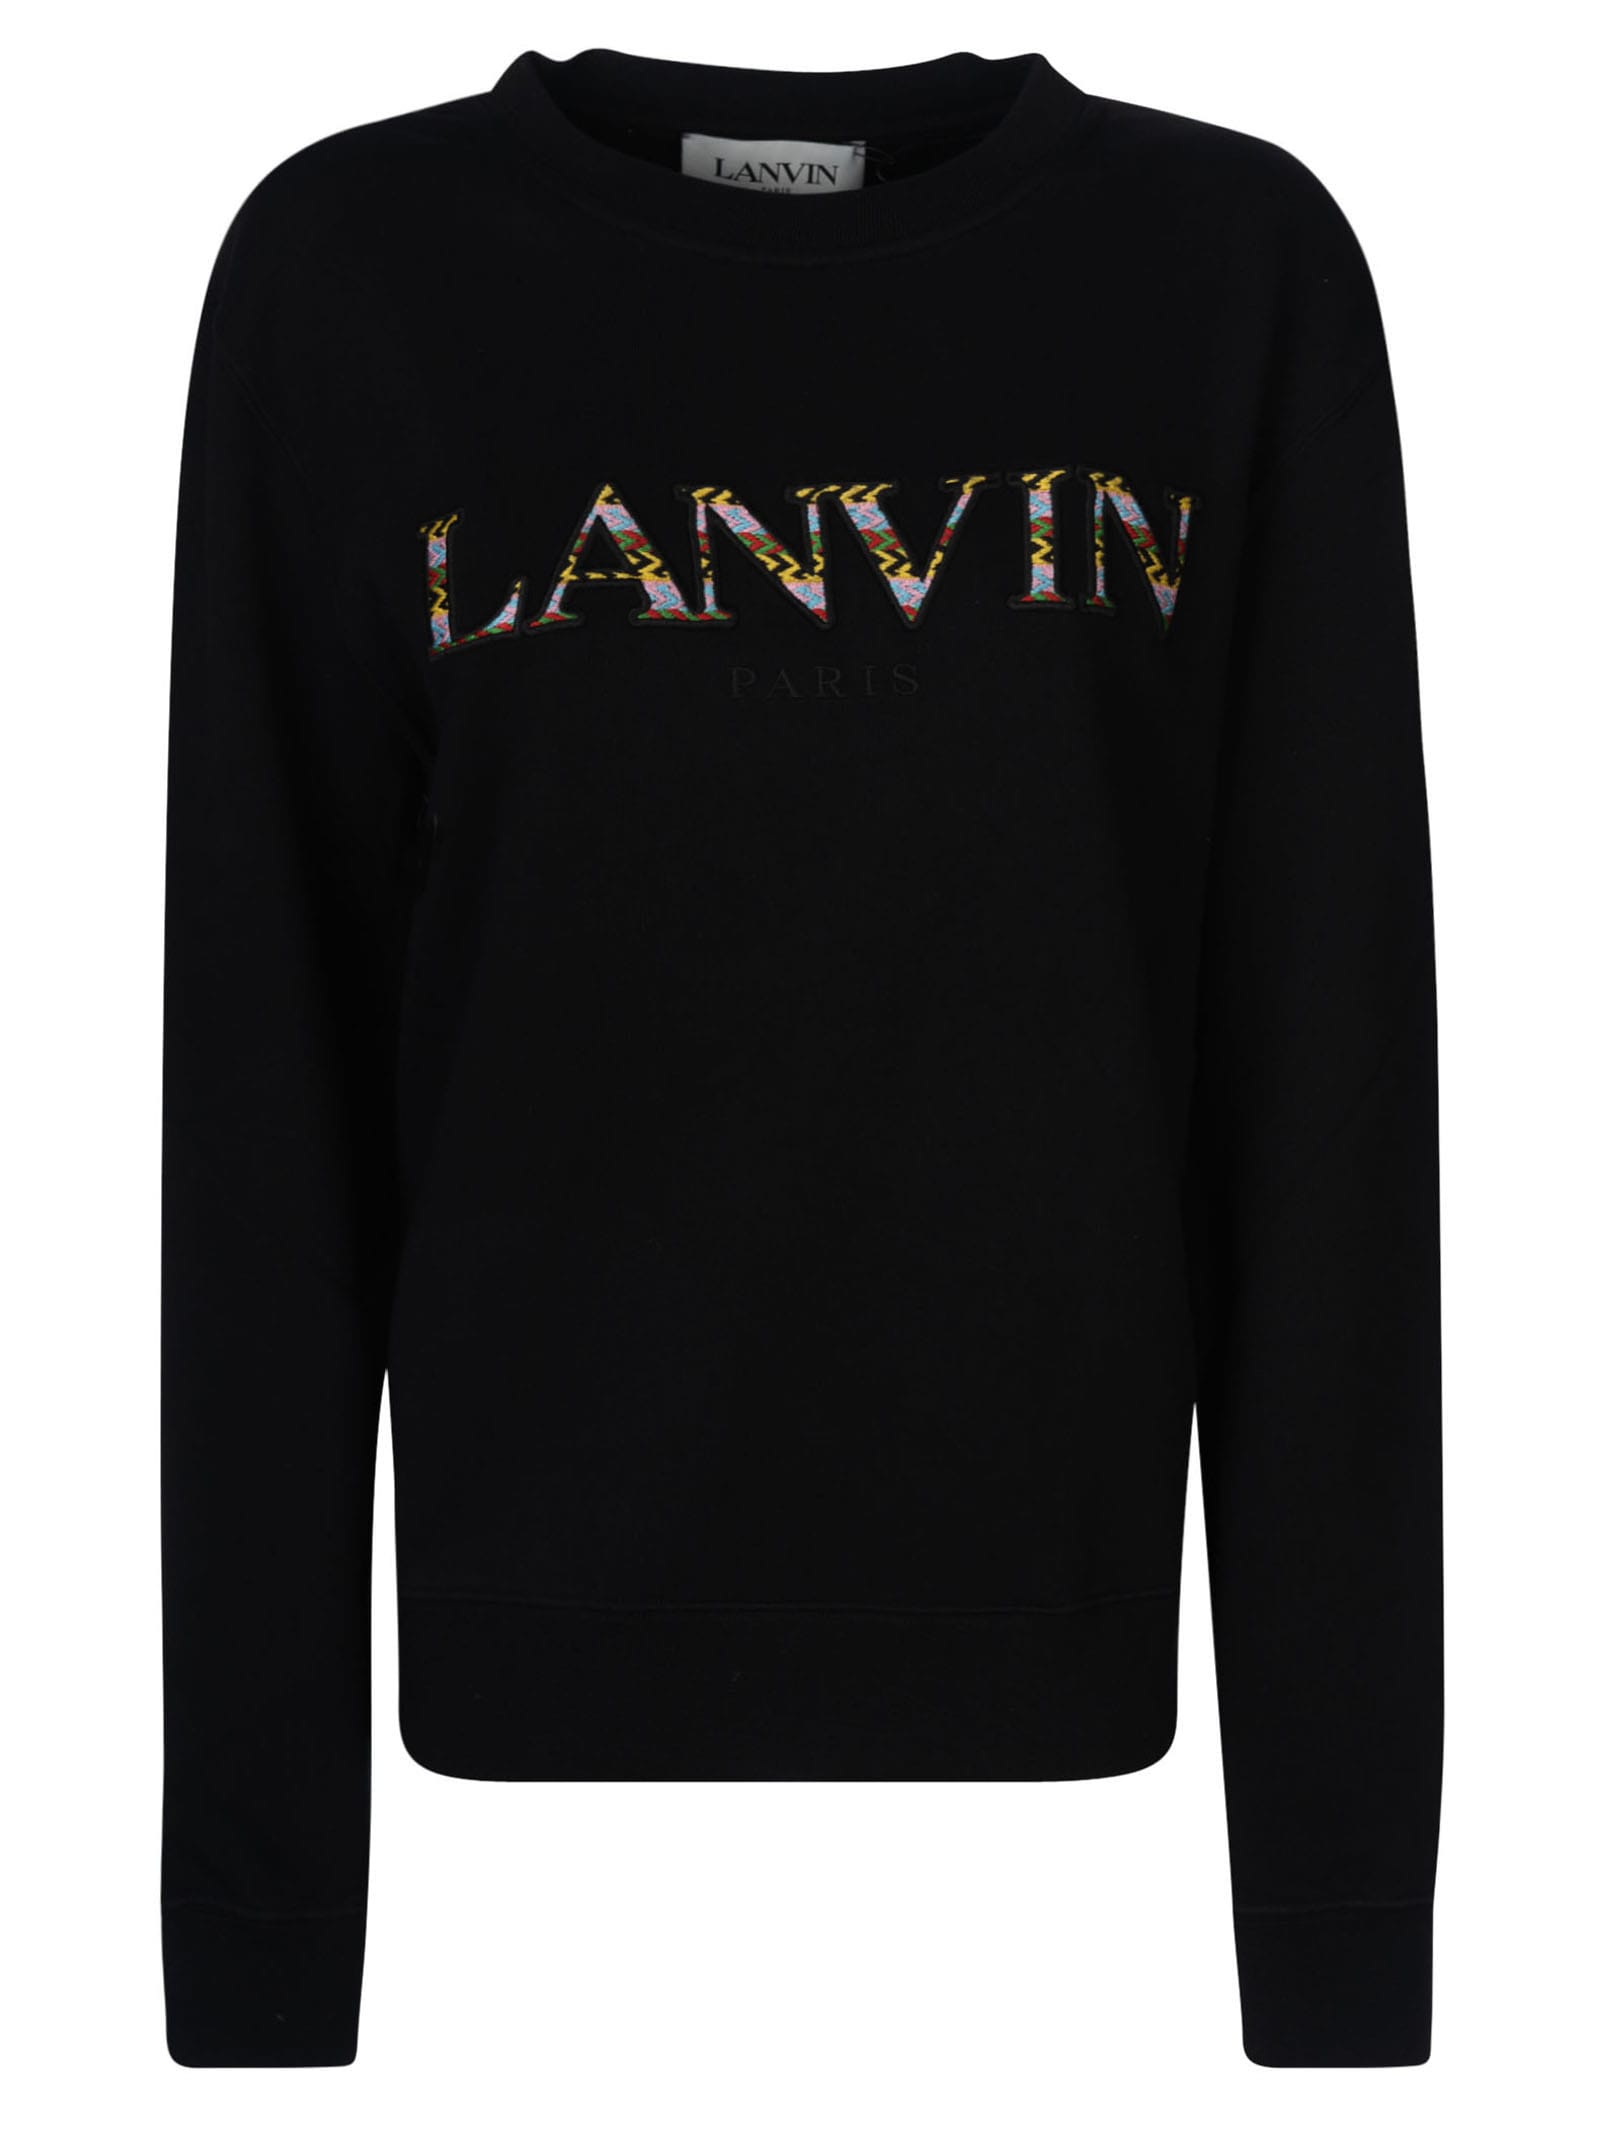 Lanvin Curb Sweatshirt